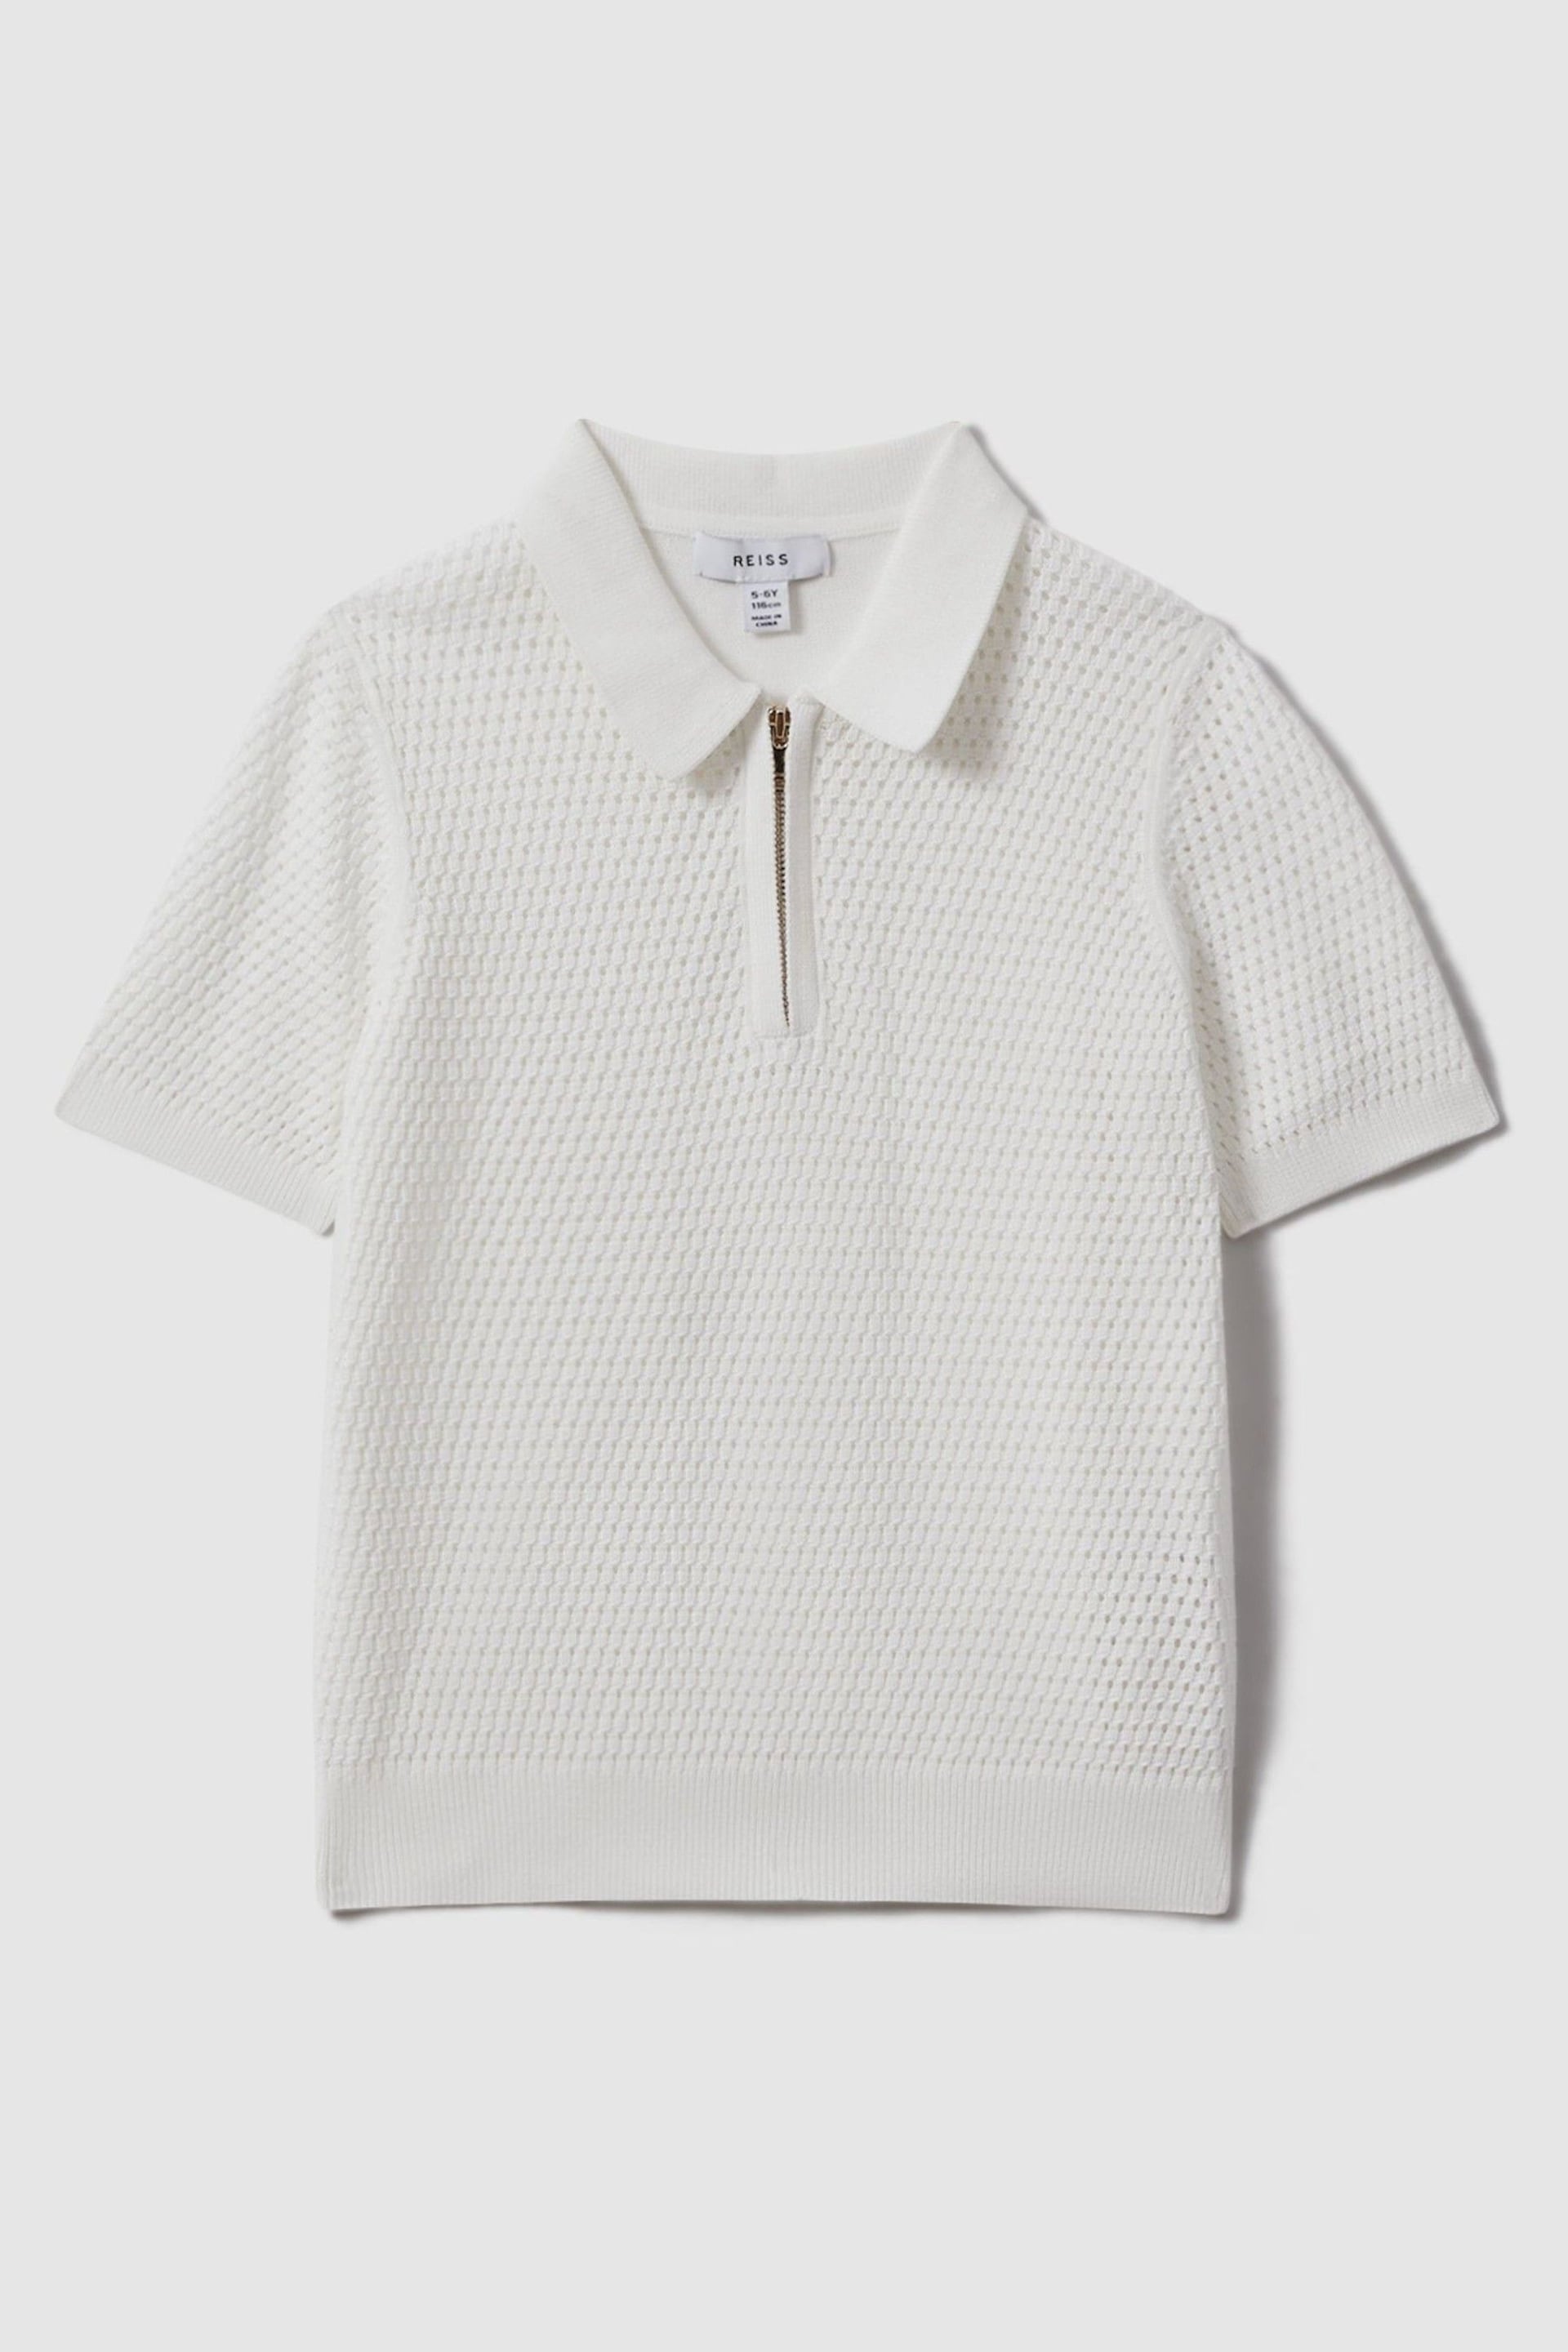 Reiss Optic White Burnham Senior Textured Half-Zip Polo T-Shirt - Image 2 of 4